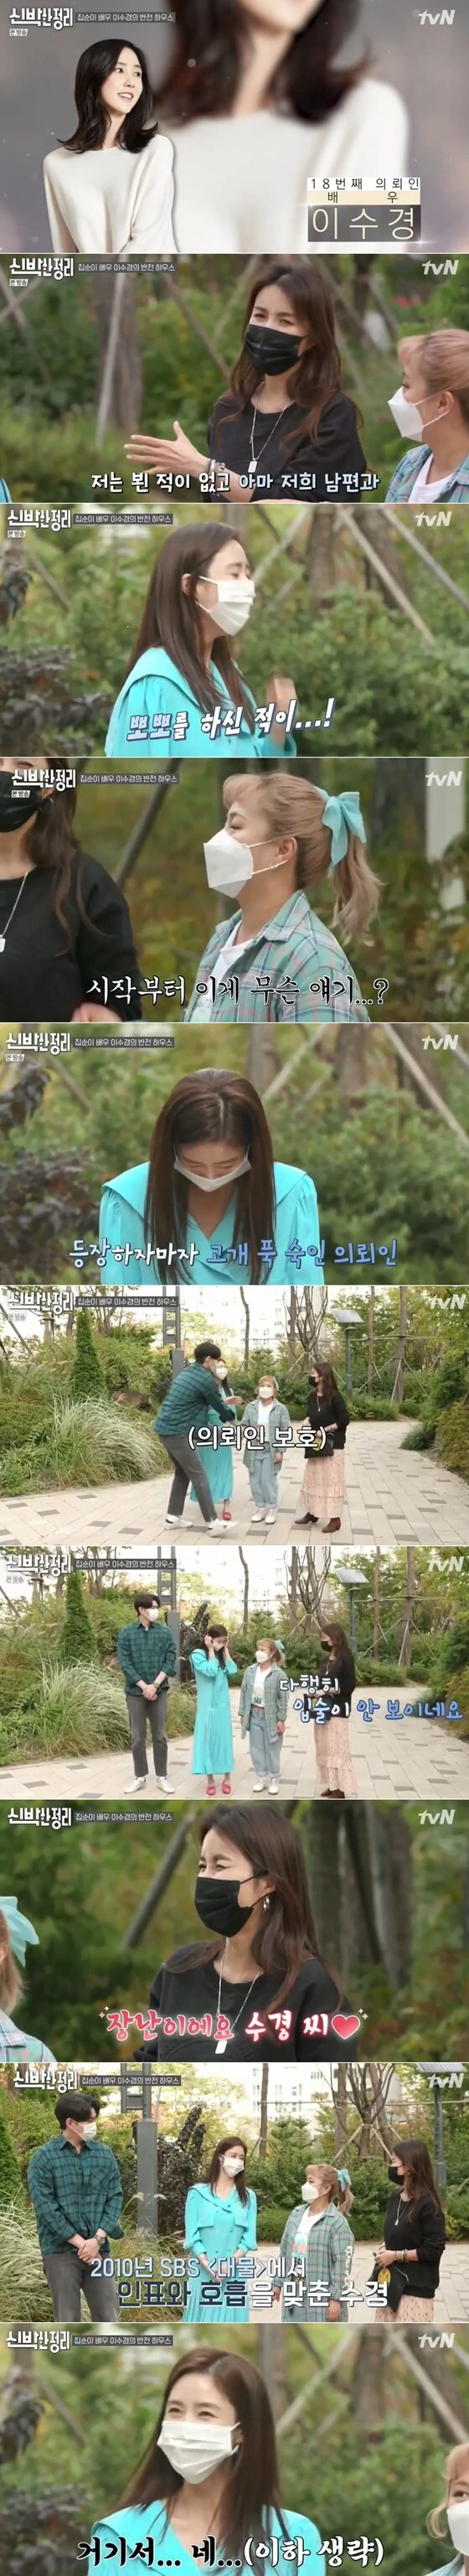 tvN의 예능 프로그램 '신박한 정리' 방송화면 갈무리 © 뉴스1